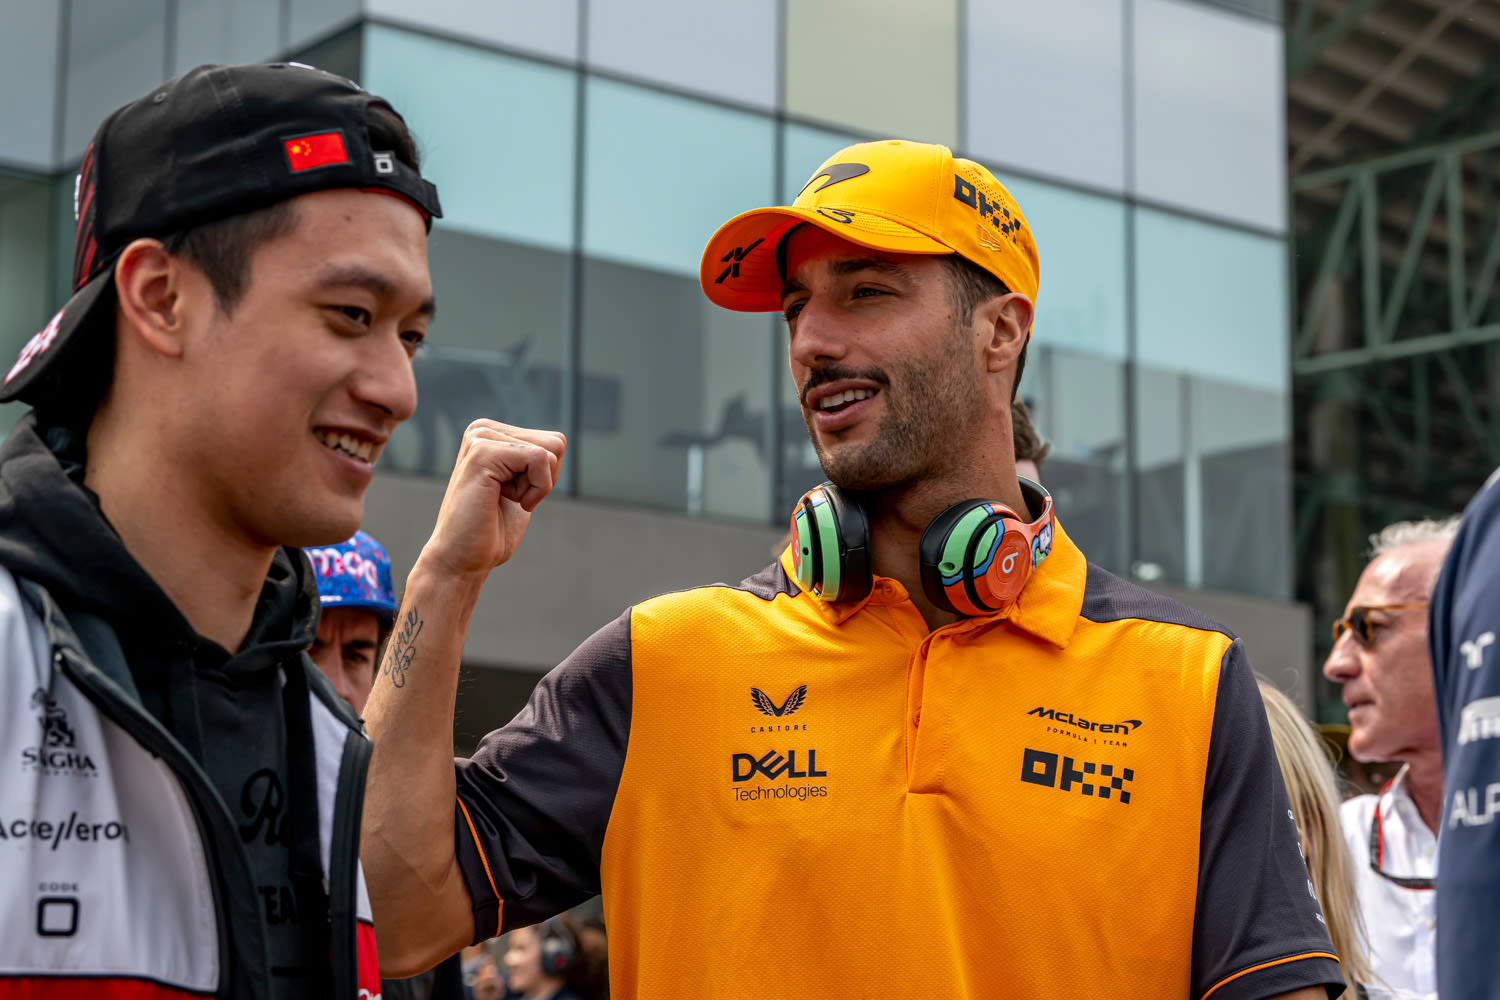 Daniel Ricciardo, from Australia competes for McLaren F1, wearing McLaren team Castore top. Race day, round 20 of the 2022 F1 championship.